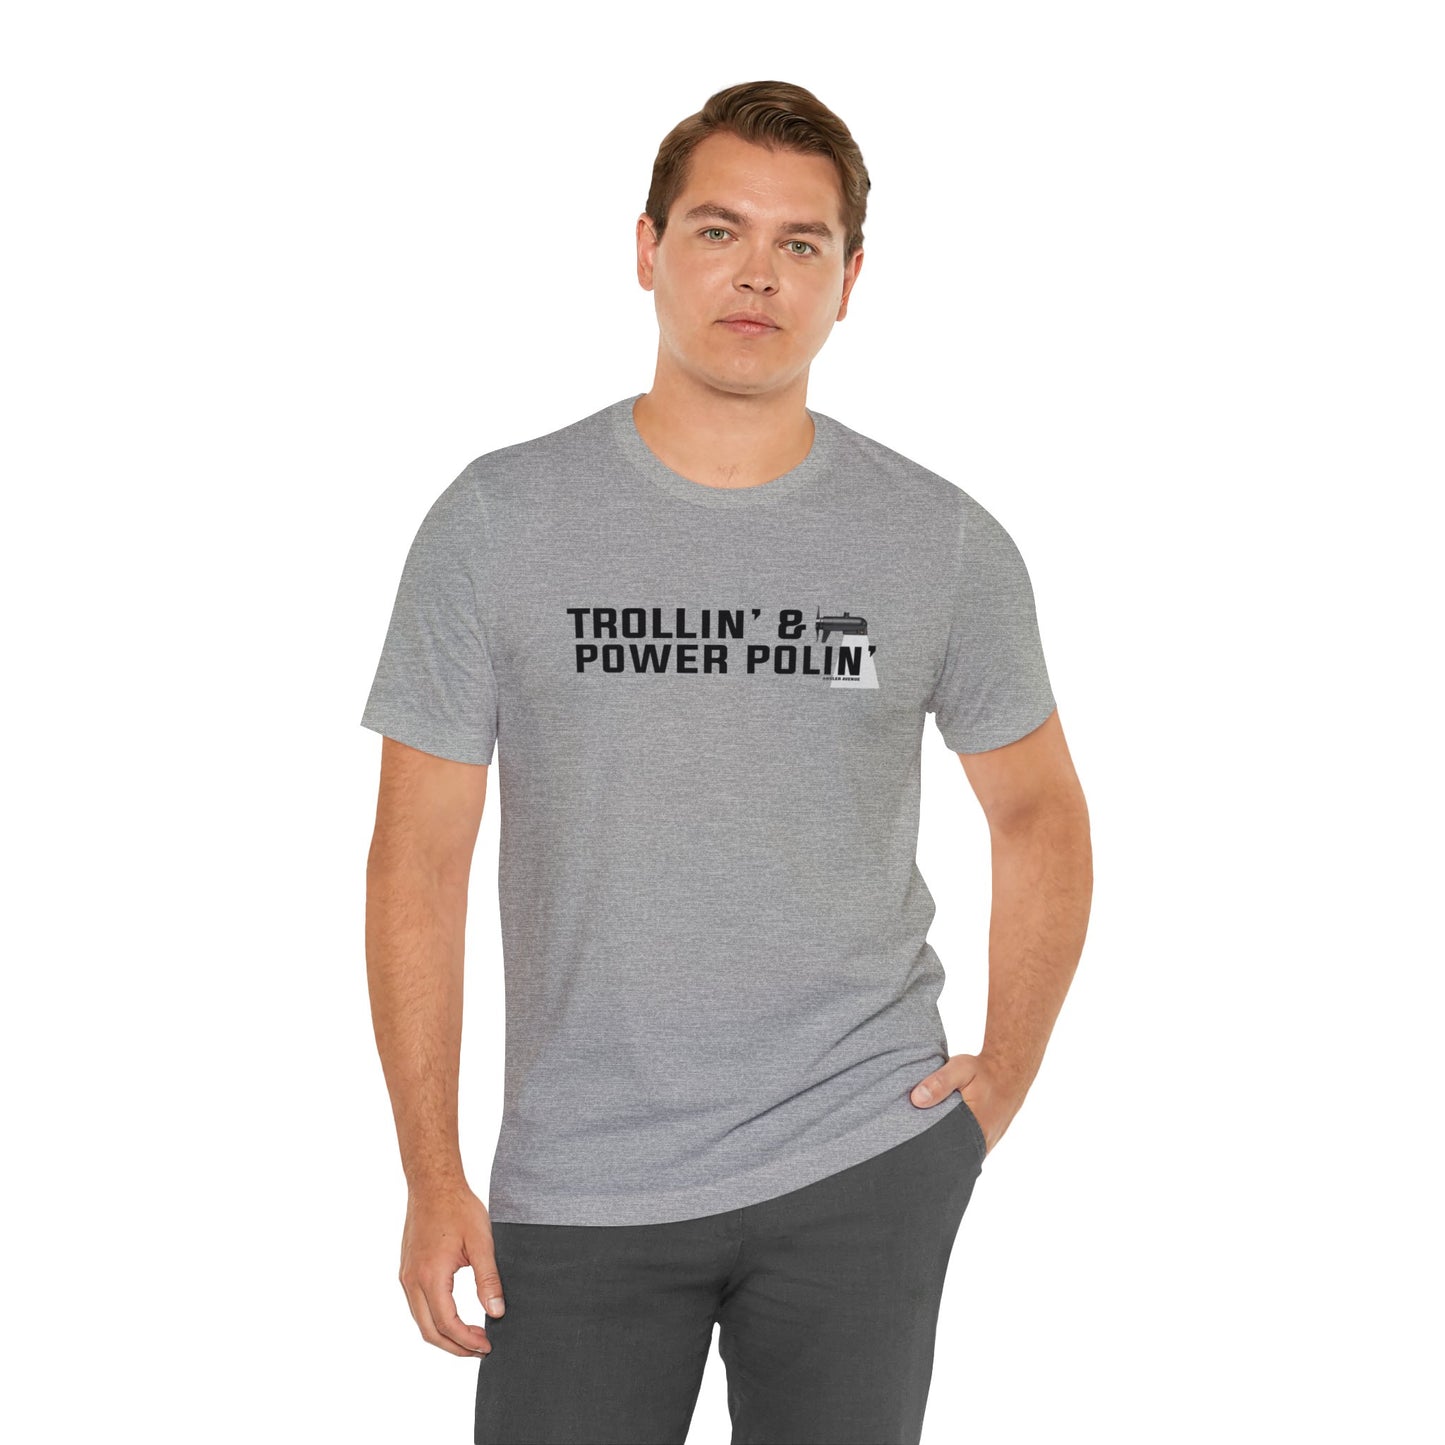 Trollin' and Power Polin' T-Shirt